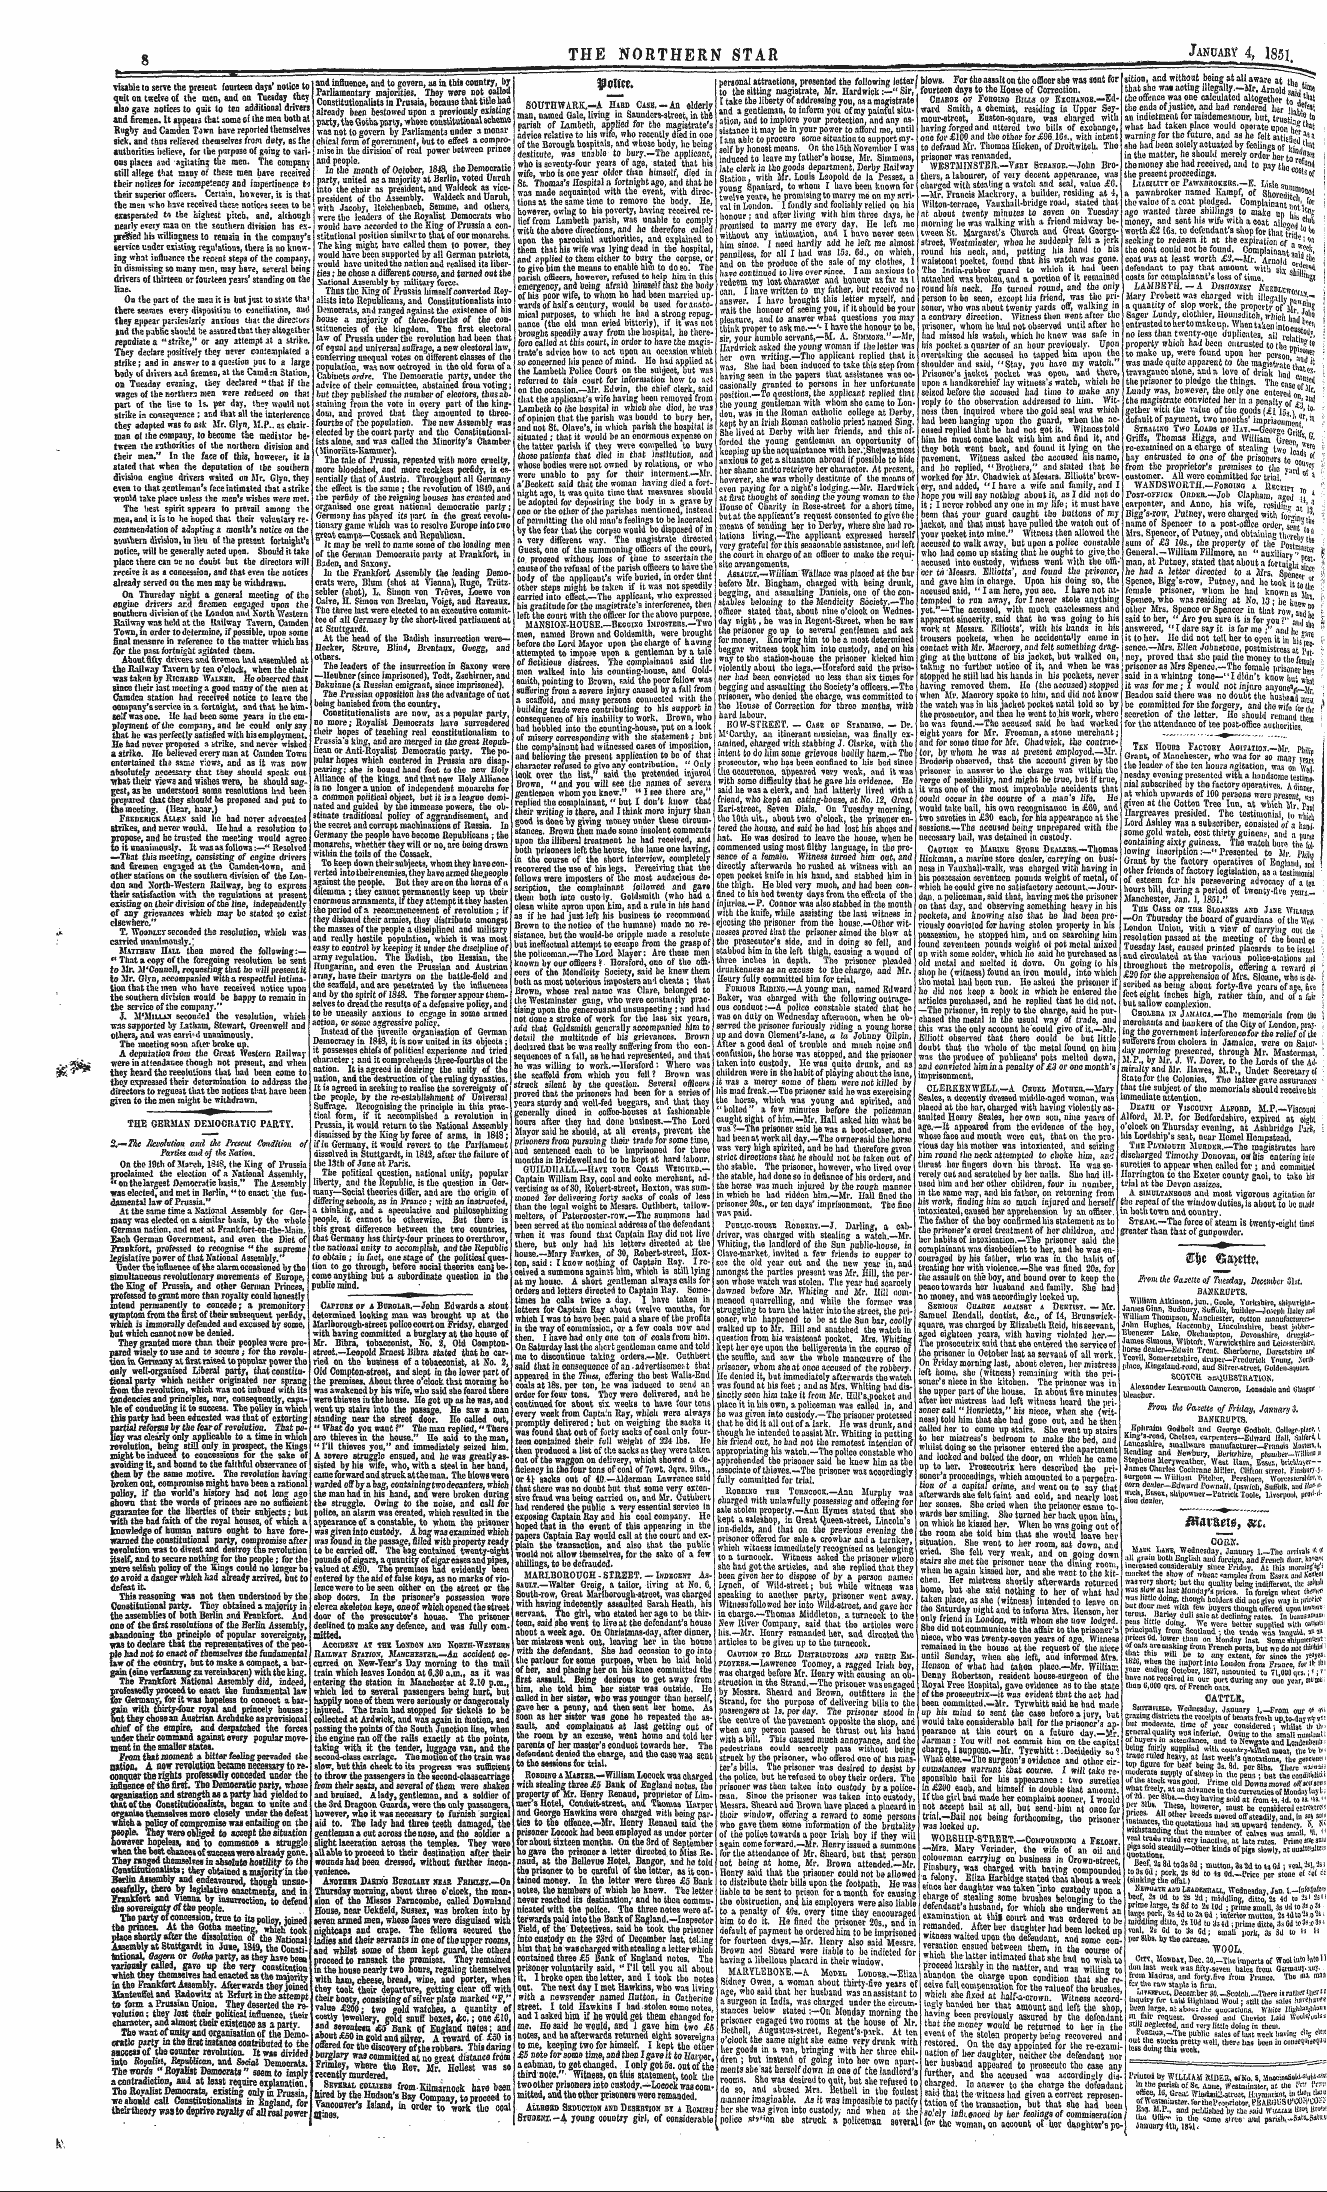 Northern Star (1837-1852): jS F Y, 3rd edition - Priutcd By William Jtidea. •T'Ko. S. Maociesljutj^Utj- 5 ' 5 '